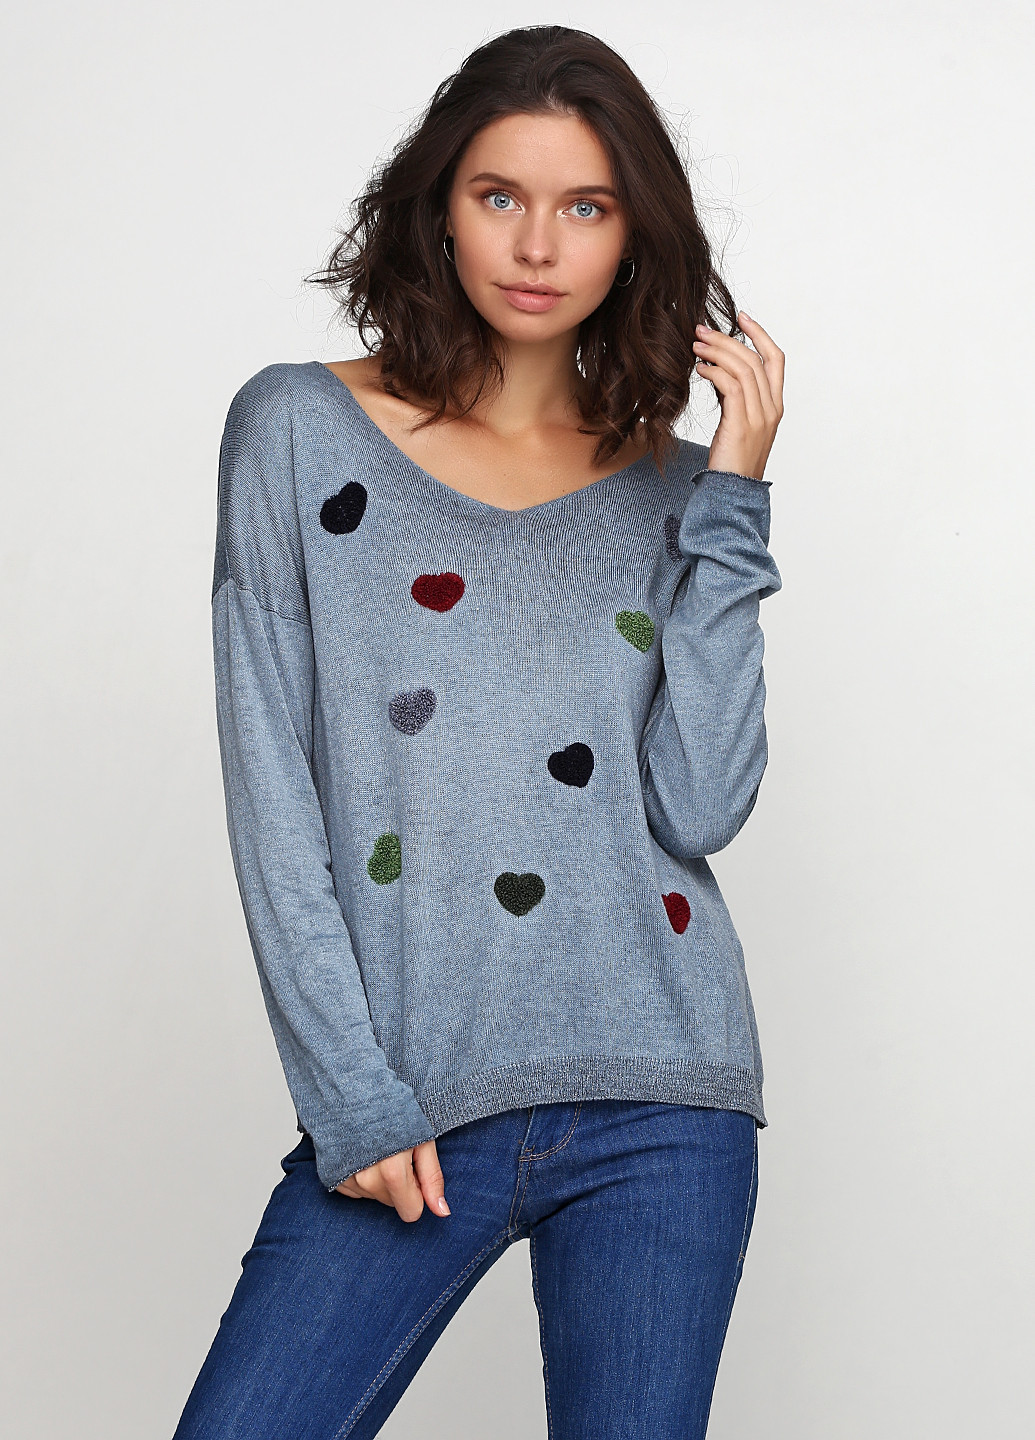 Серо-голубой демисезонный пуловер пуловер Made in Italy